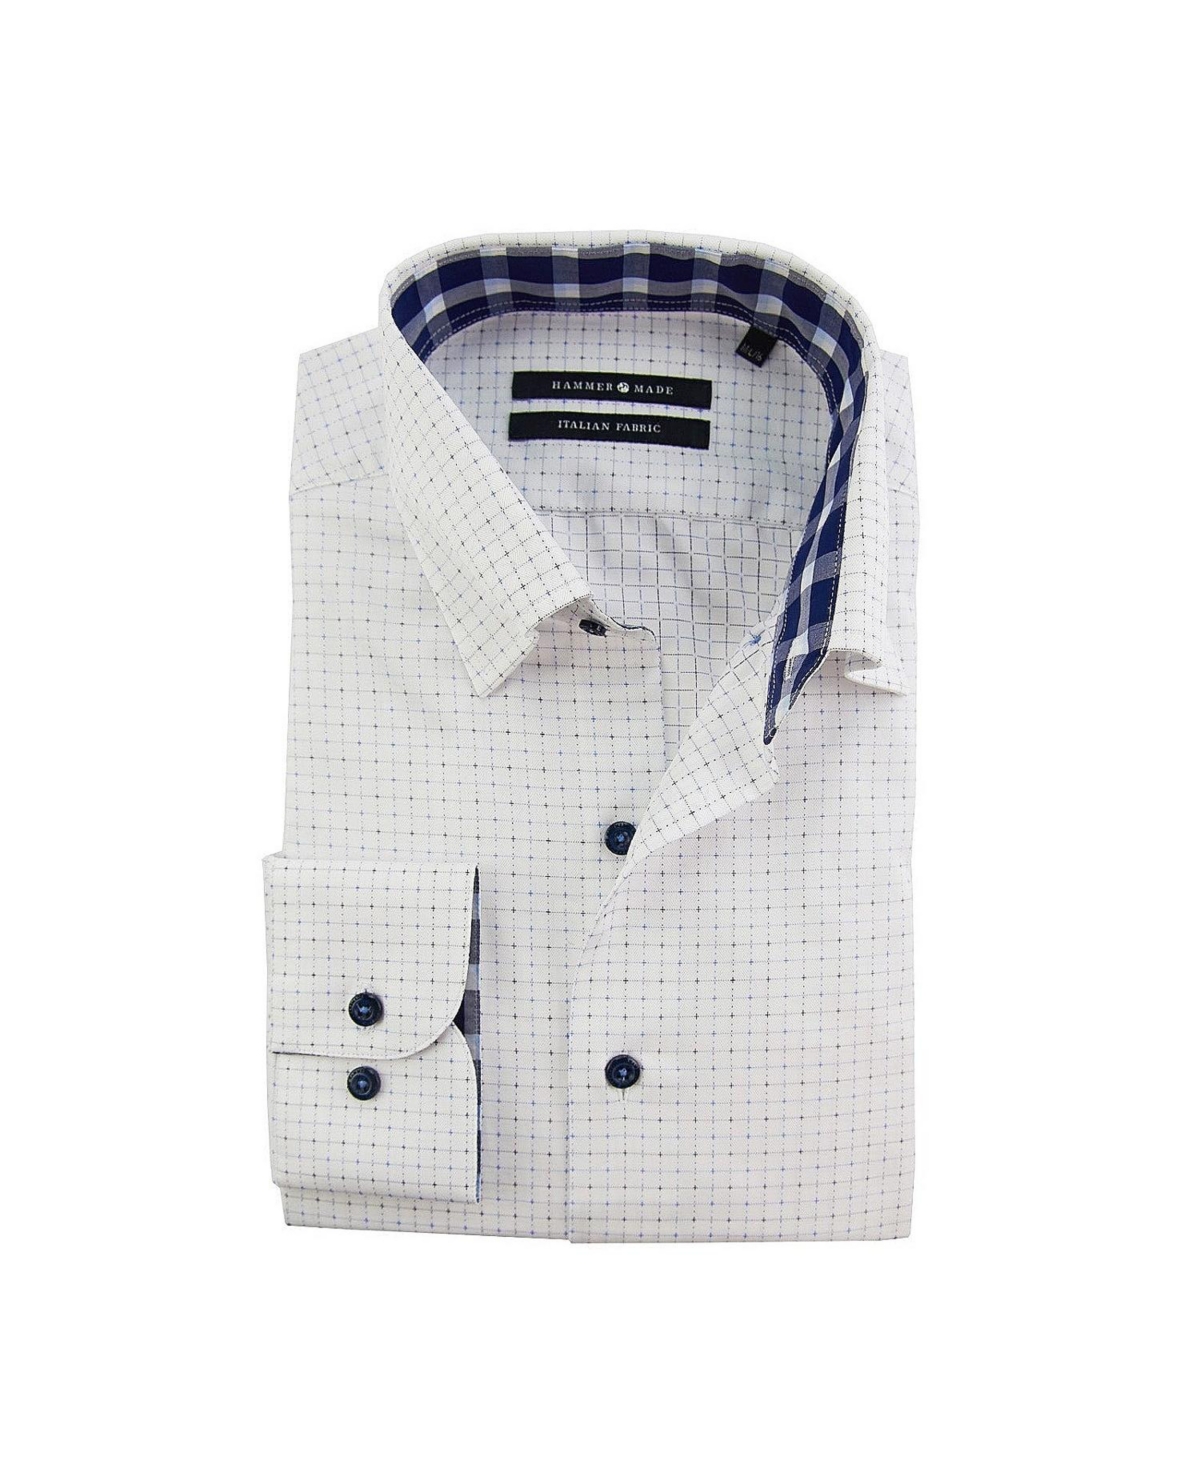 - Men's Cotton White Check Dress Shirt with Hidden Button Down Collar - White